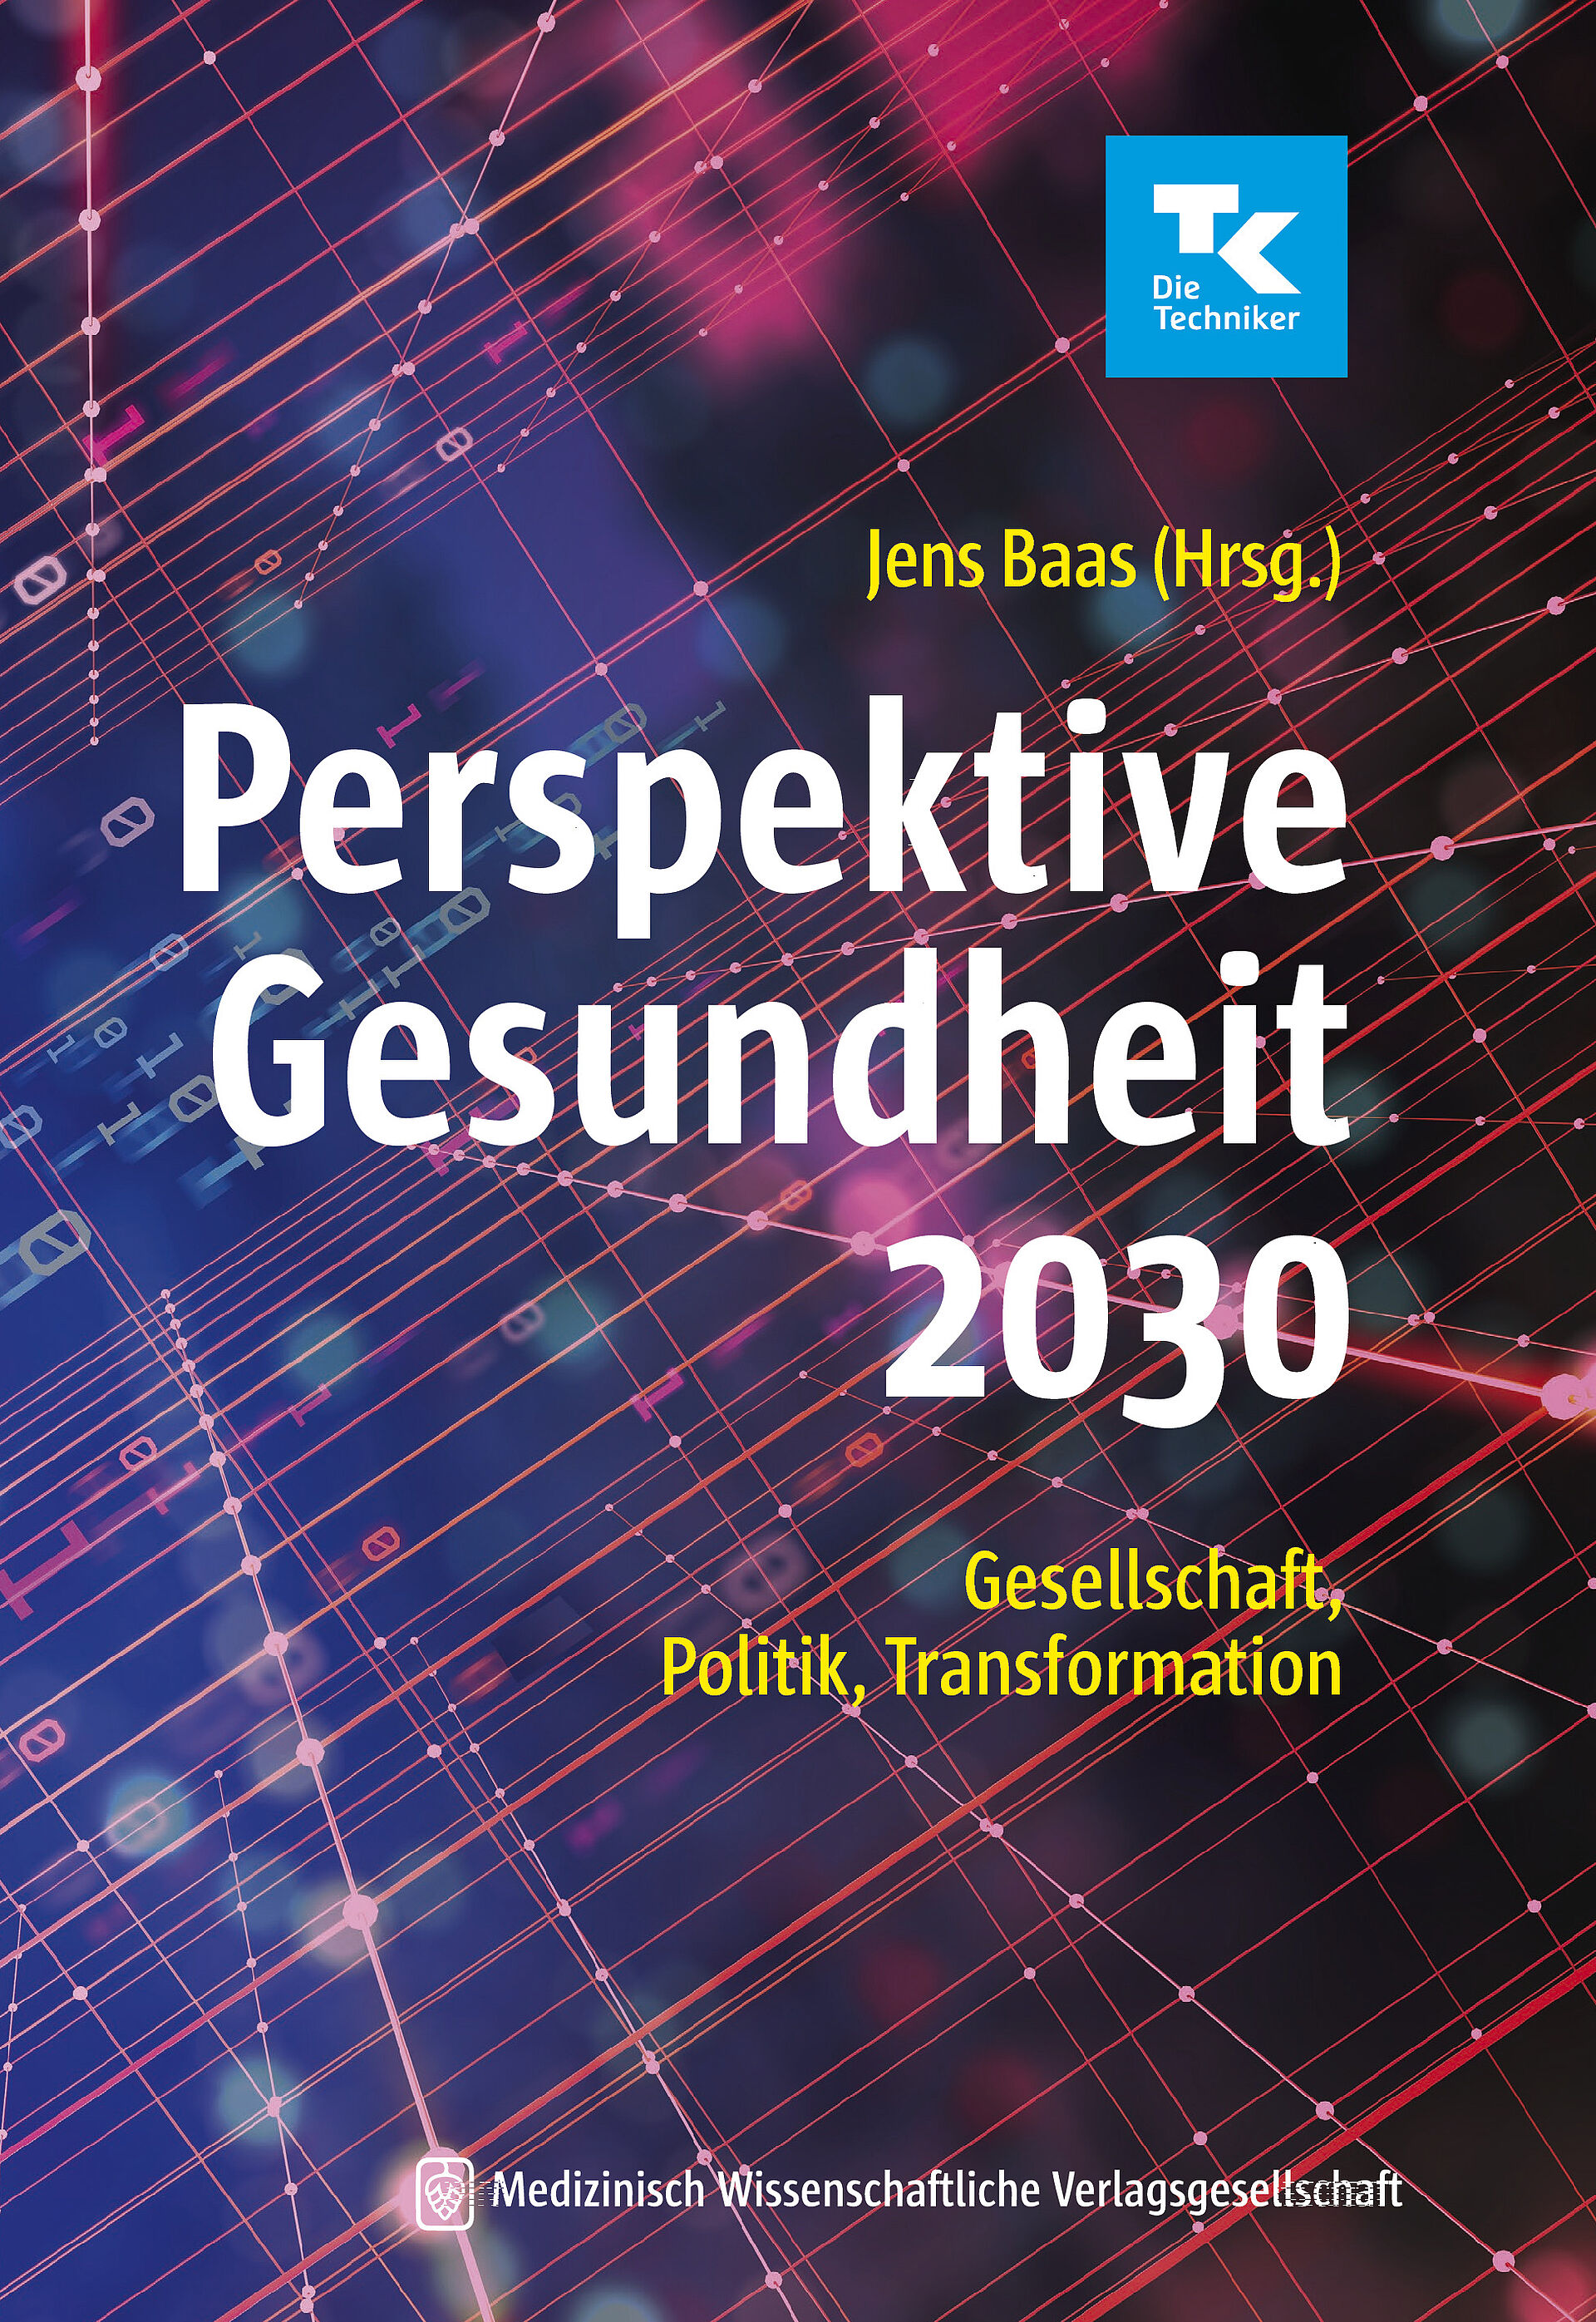 Perspektive Gesundheit 2030